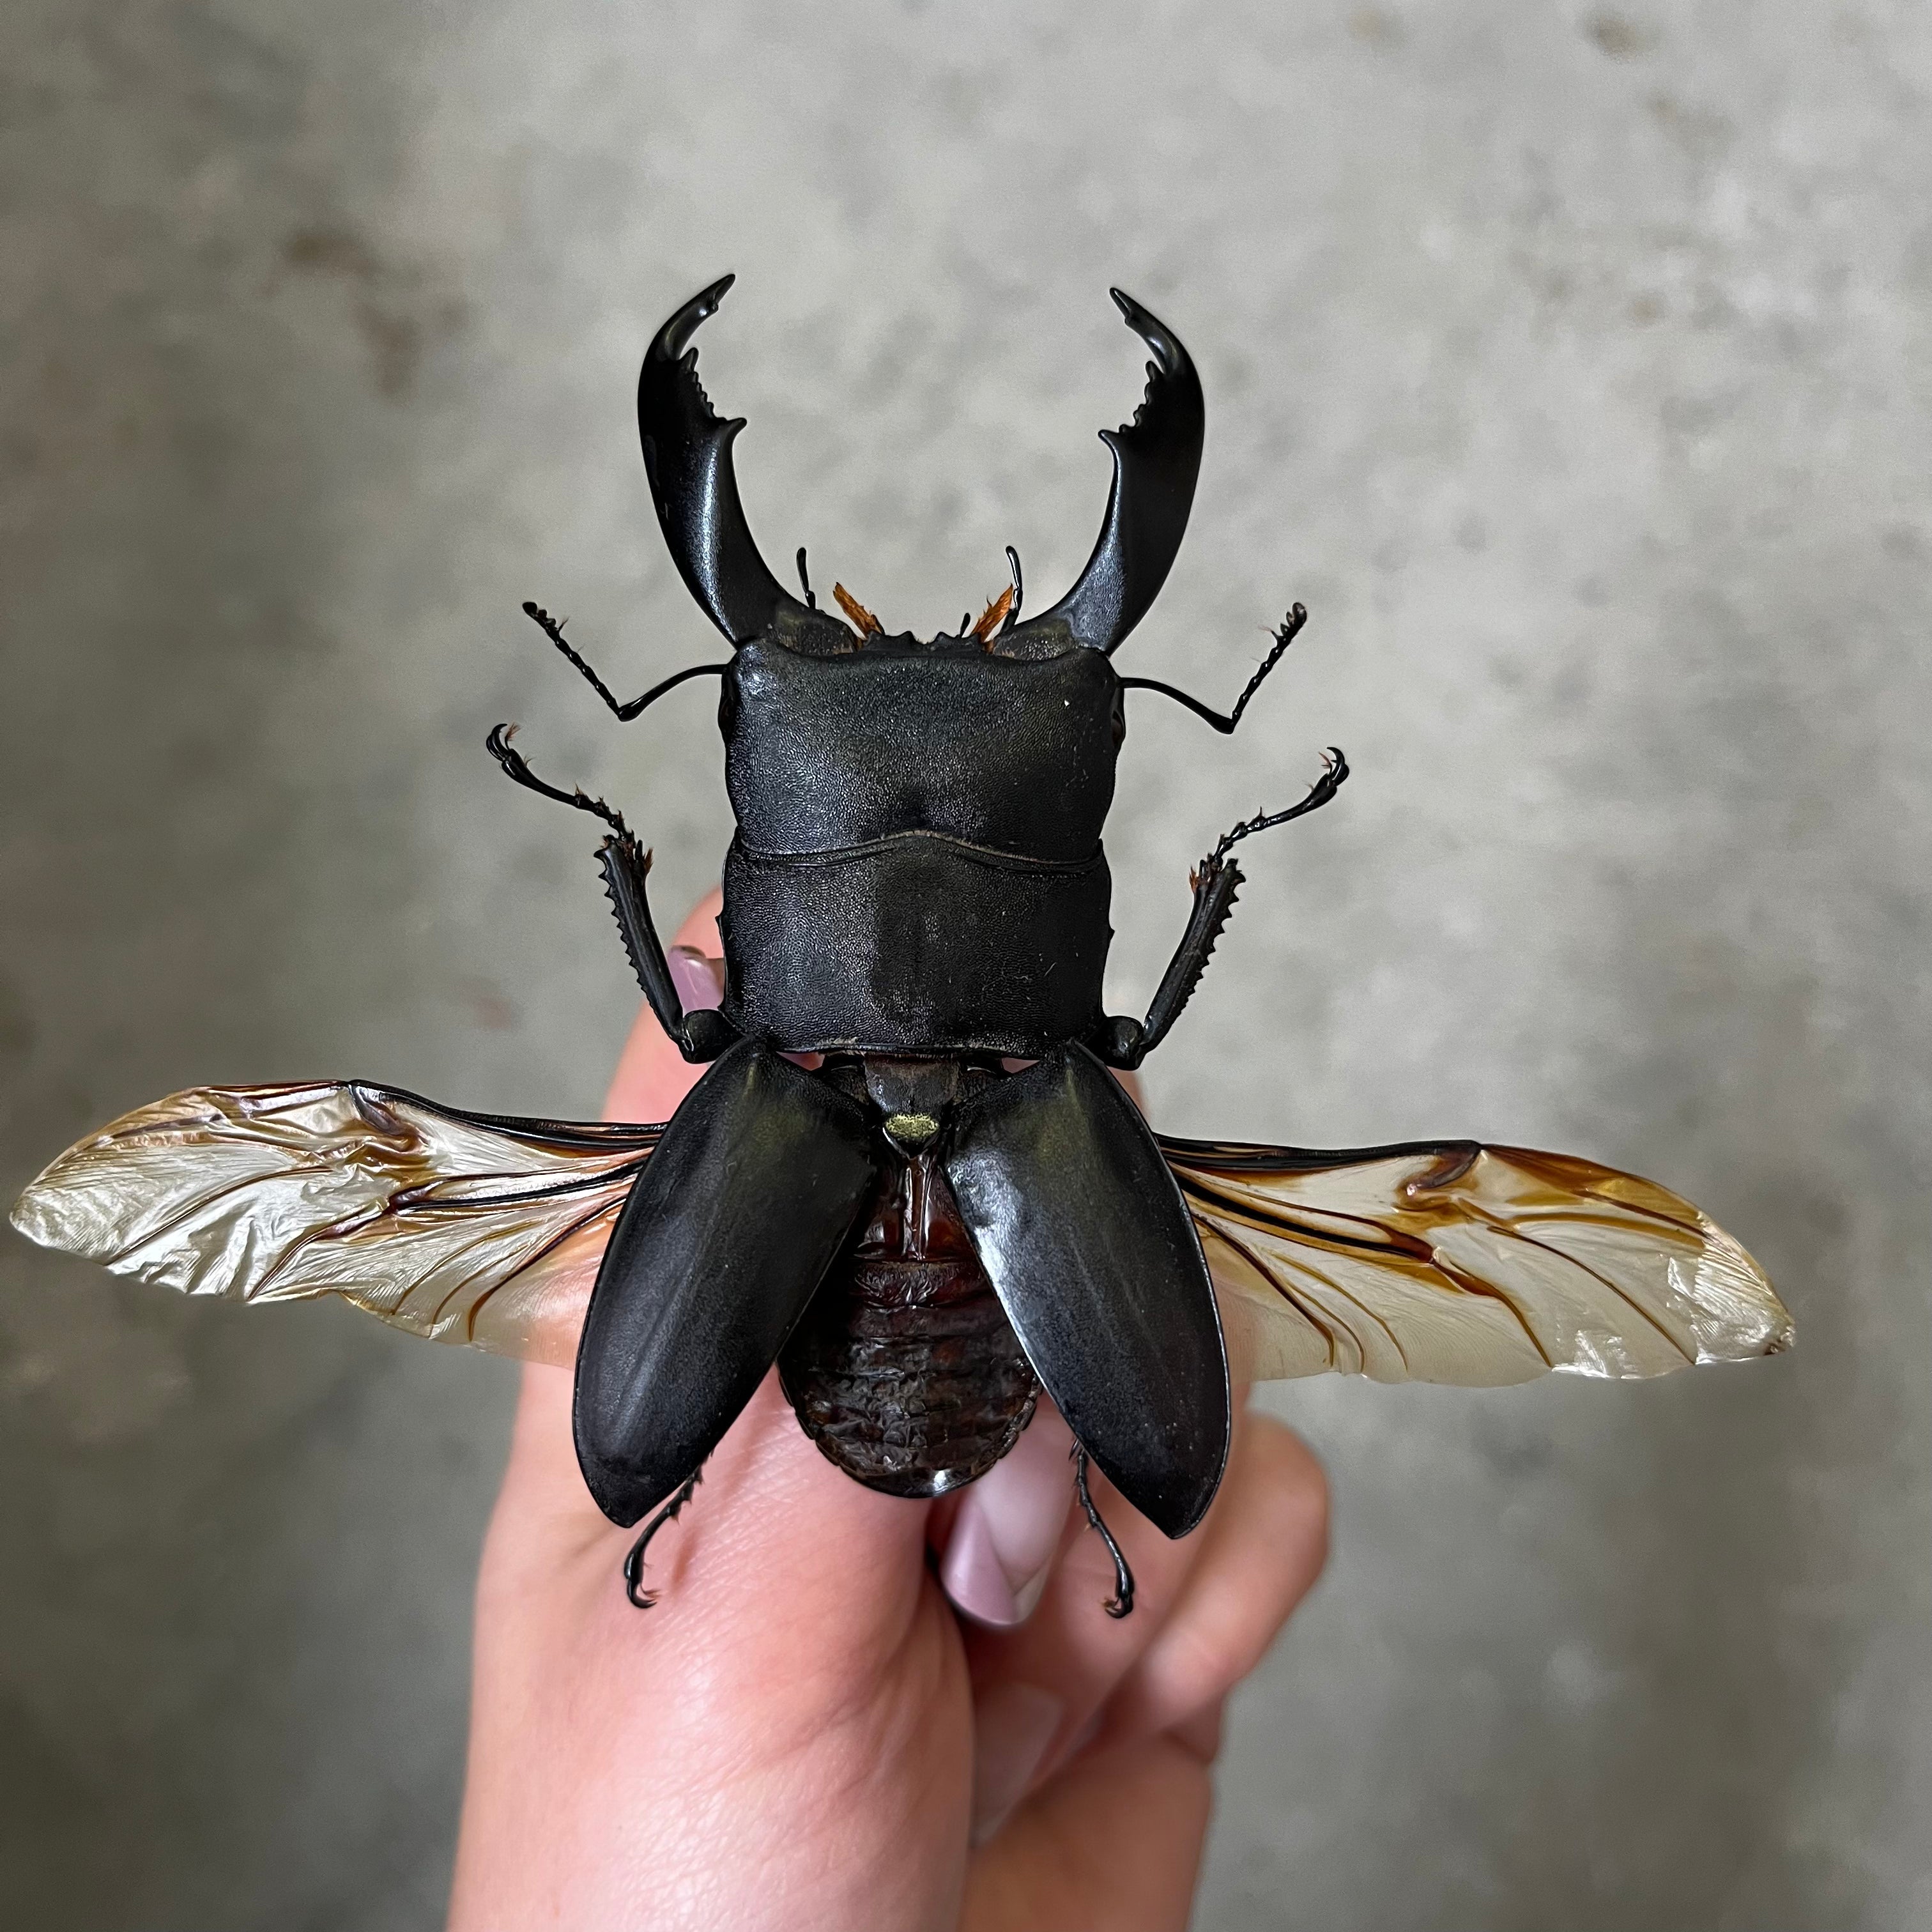 HUGE Stag Beetle 'Dorcus alcides' – Little Caterpillar Art